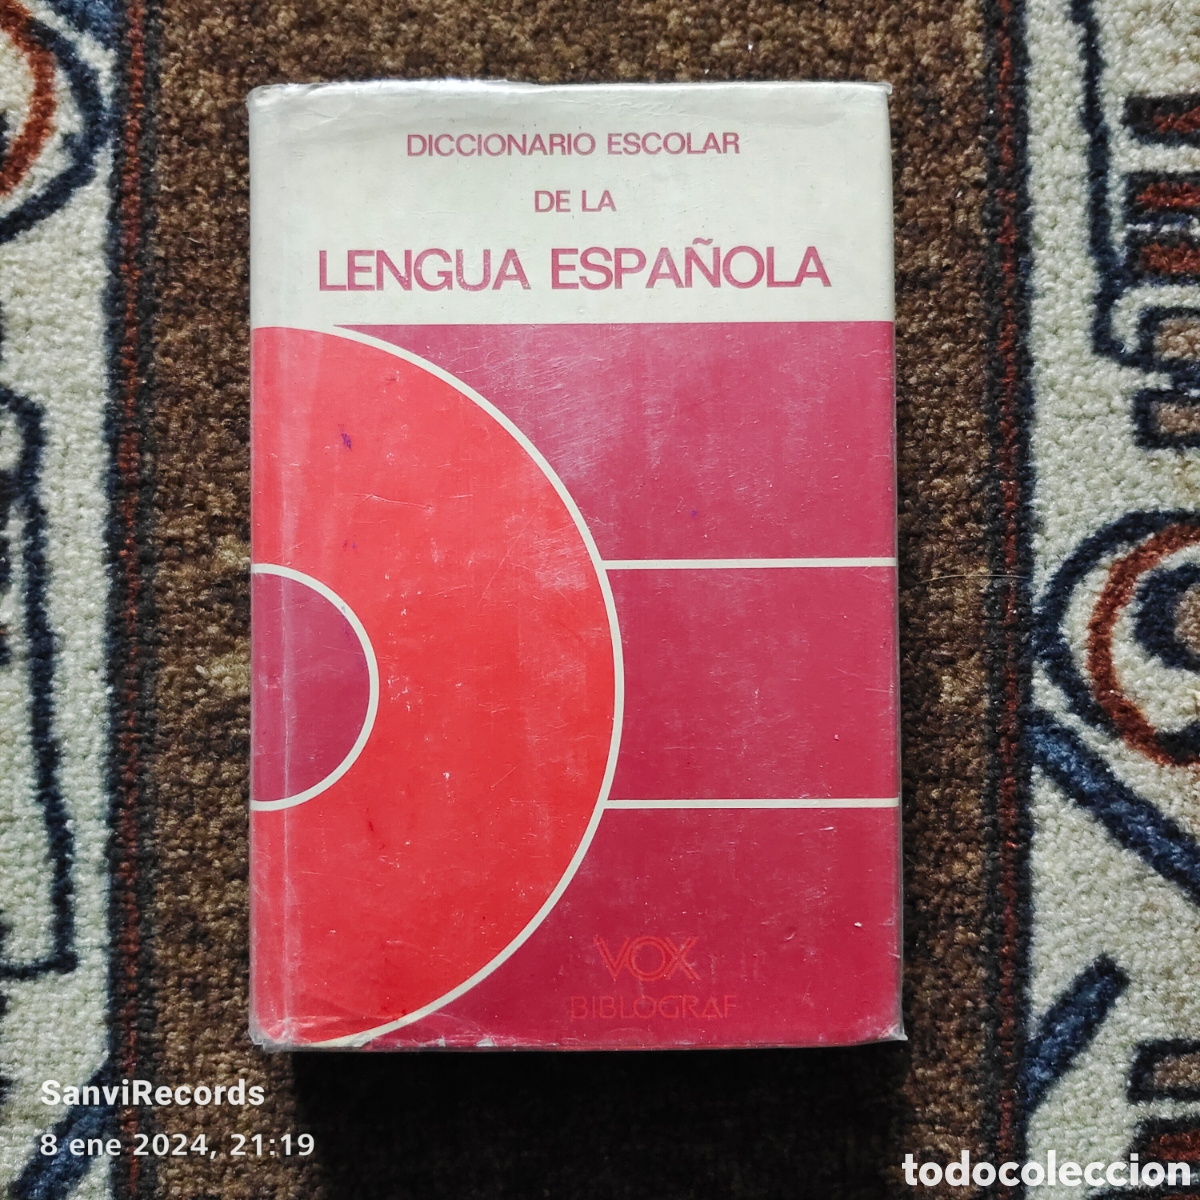 Diccionario Escolar de la Lengua Española (VOX - Lengua Española